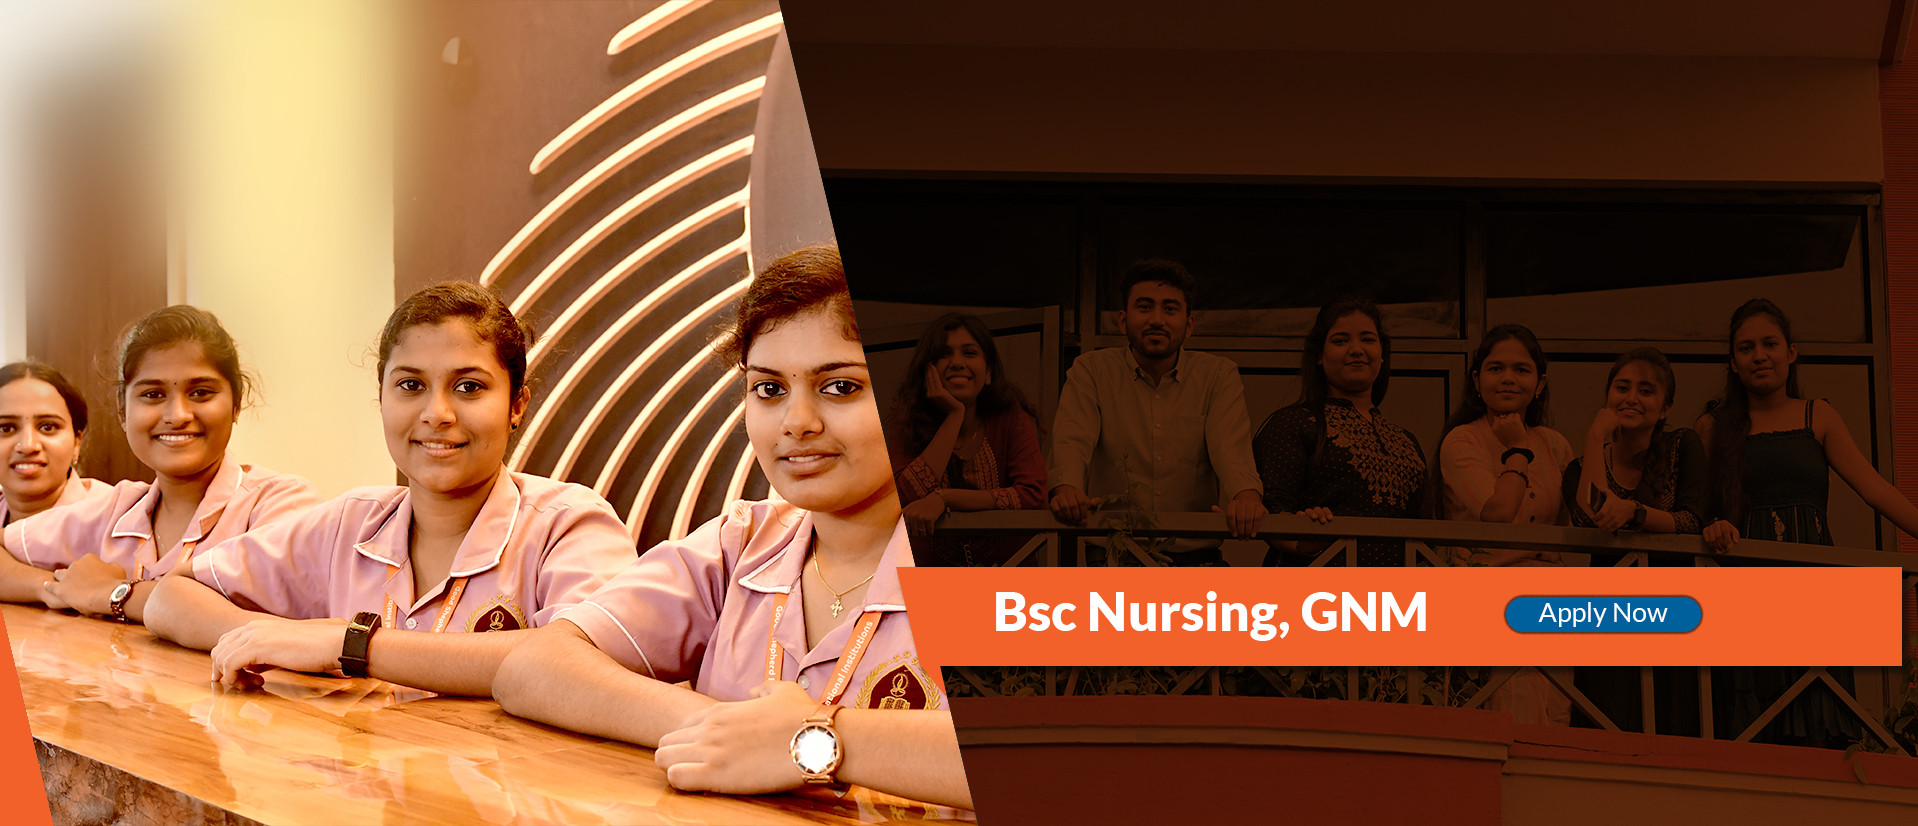 Best Bsc Nursing College in Bangalore